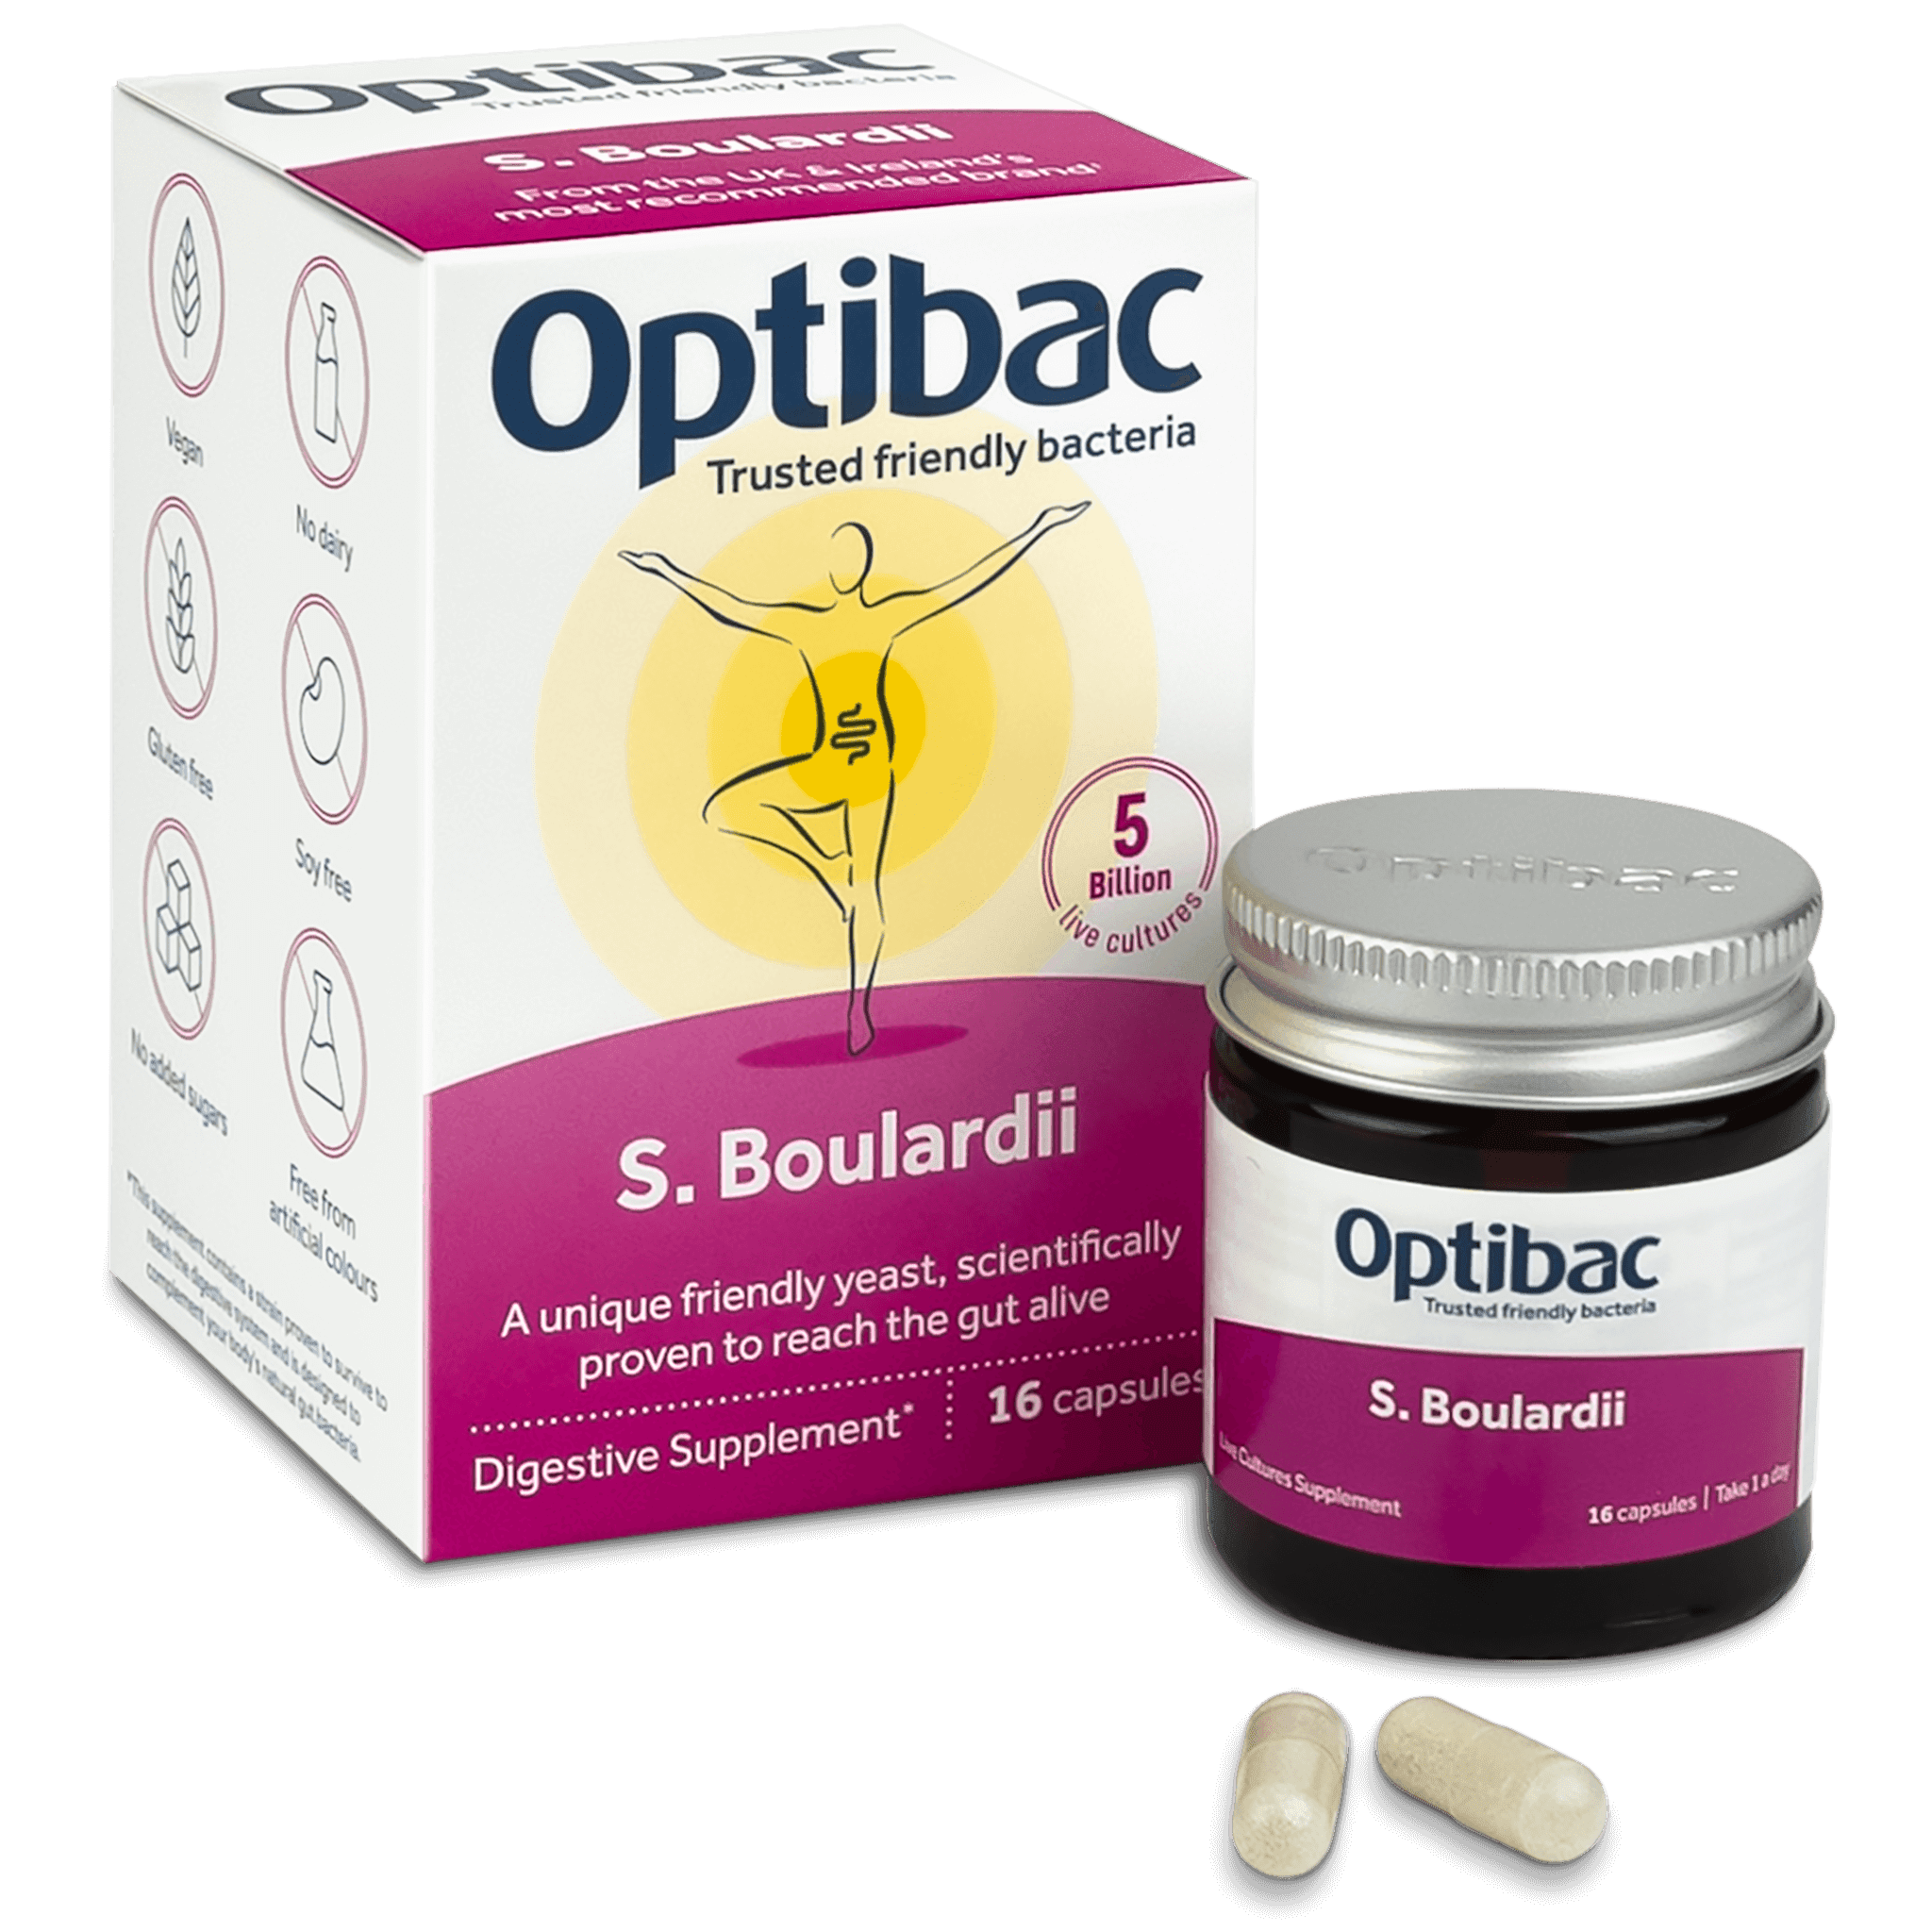 Optibac Probiotics Saccharomyces boulardii (16 capsules) pack contents